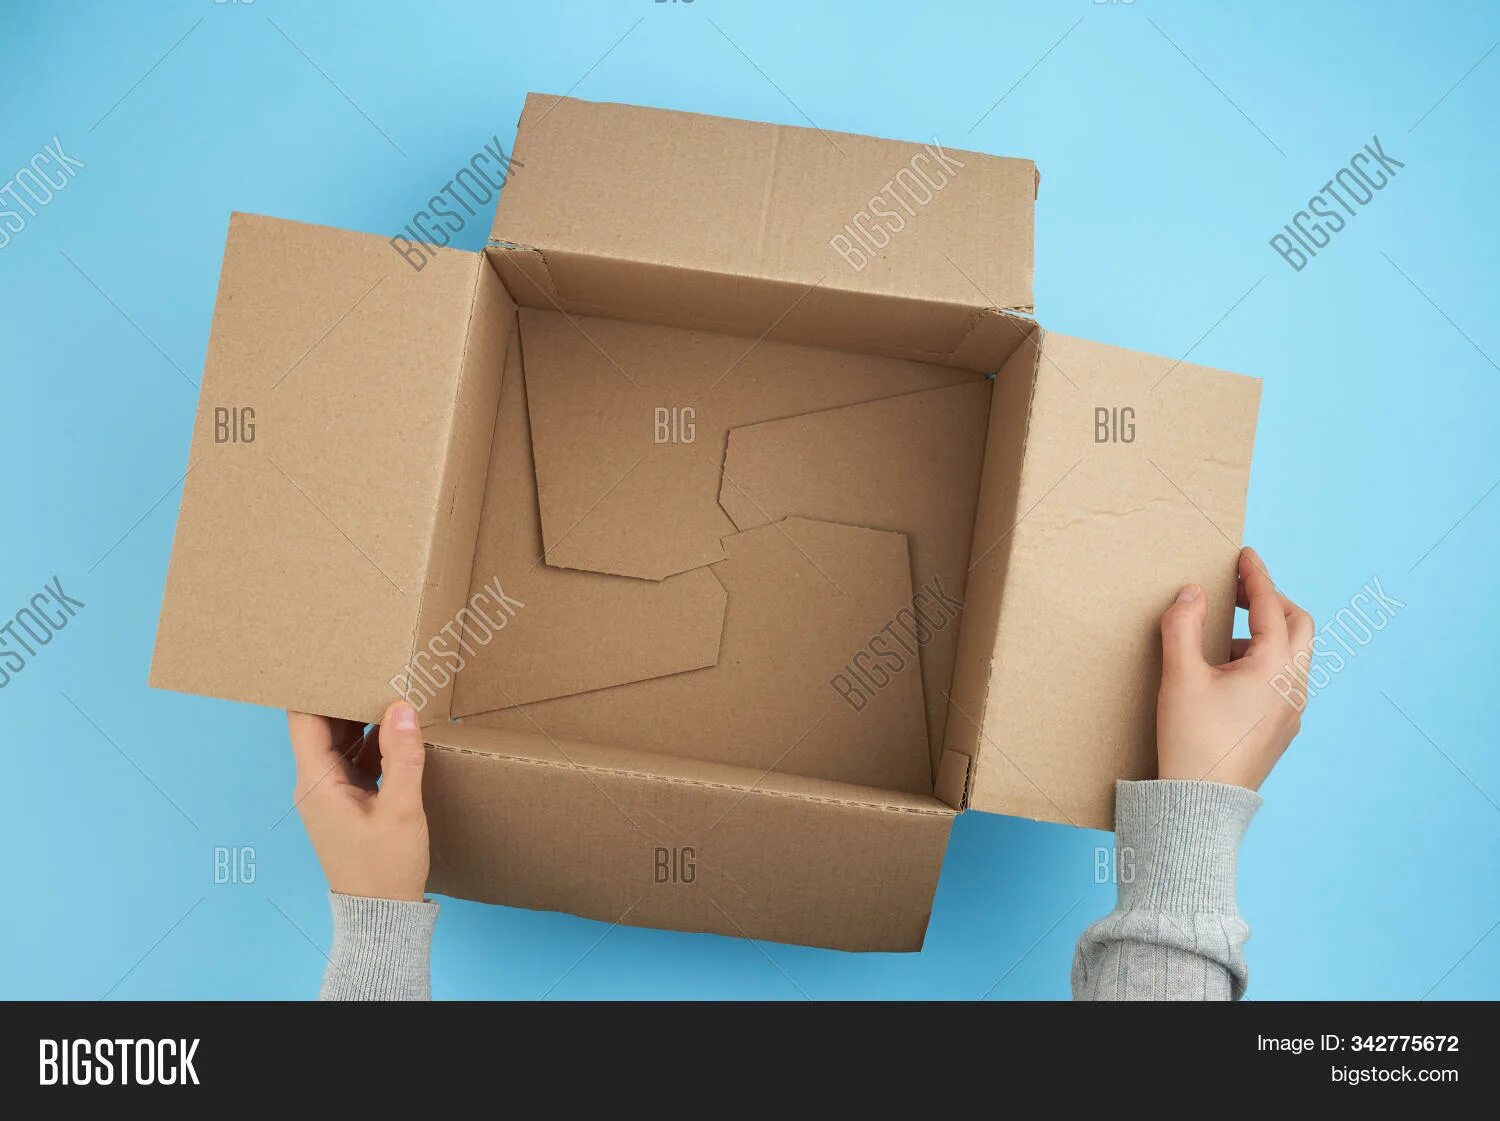 Открывает коробку. Человек открывает коробку. Открытая коробка в руках. Коробка открытая в руках вид сверху.